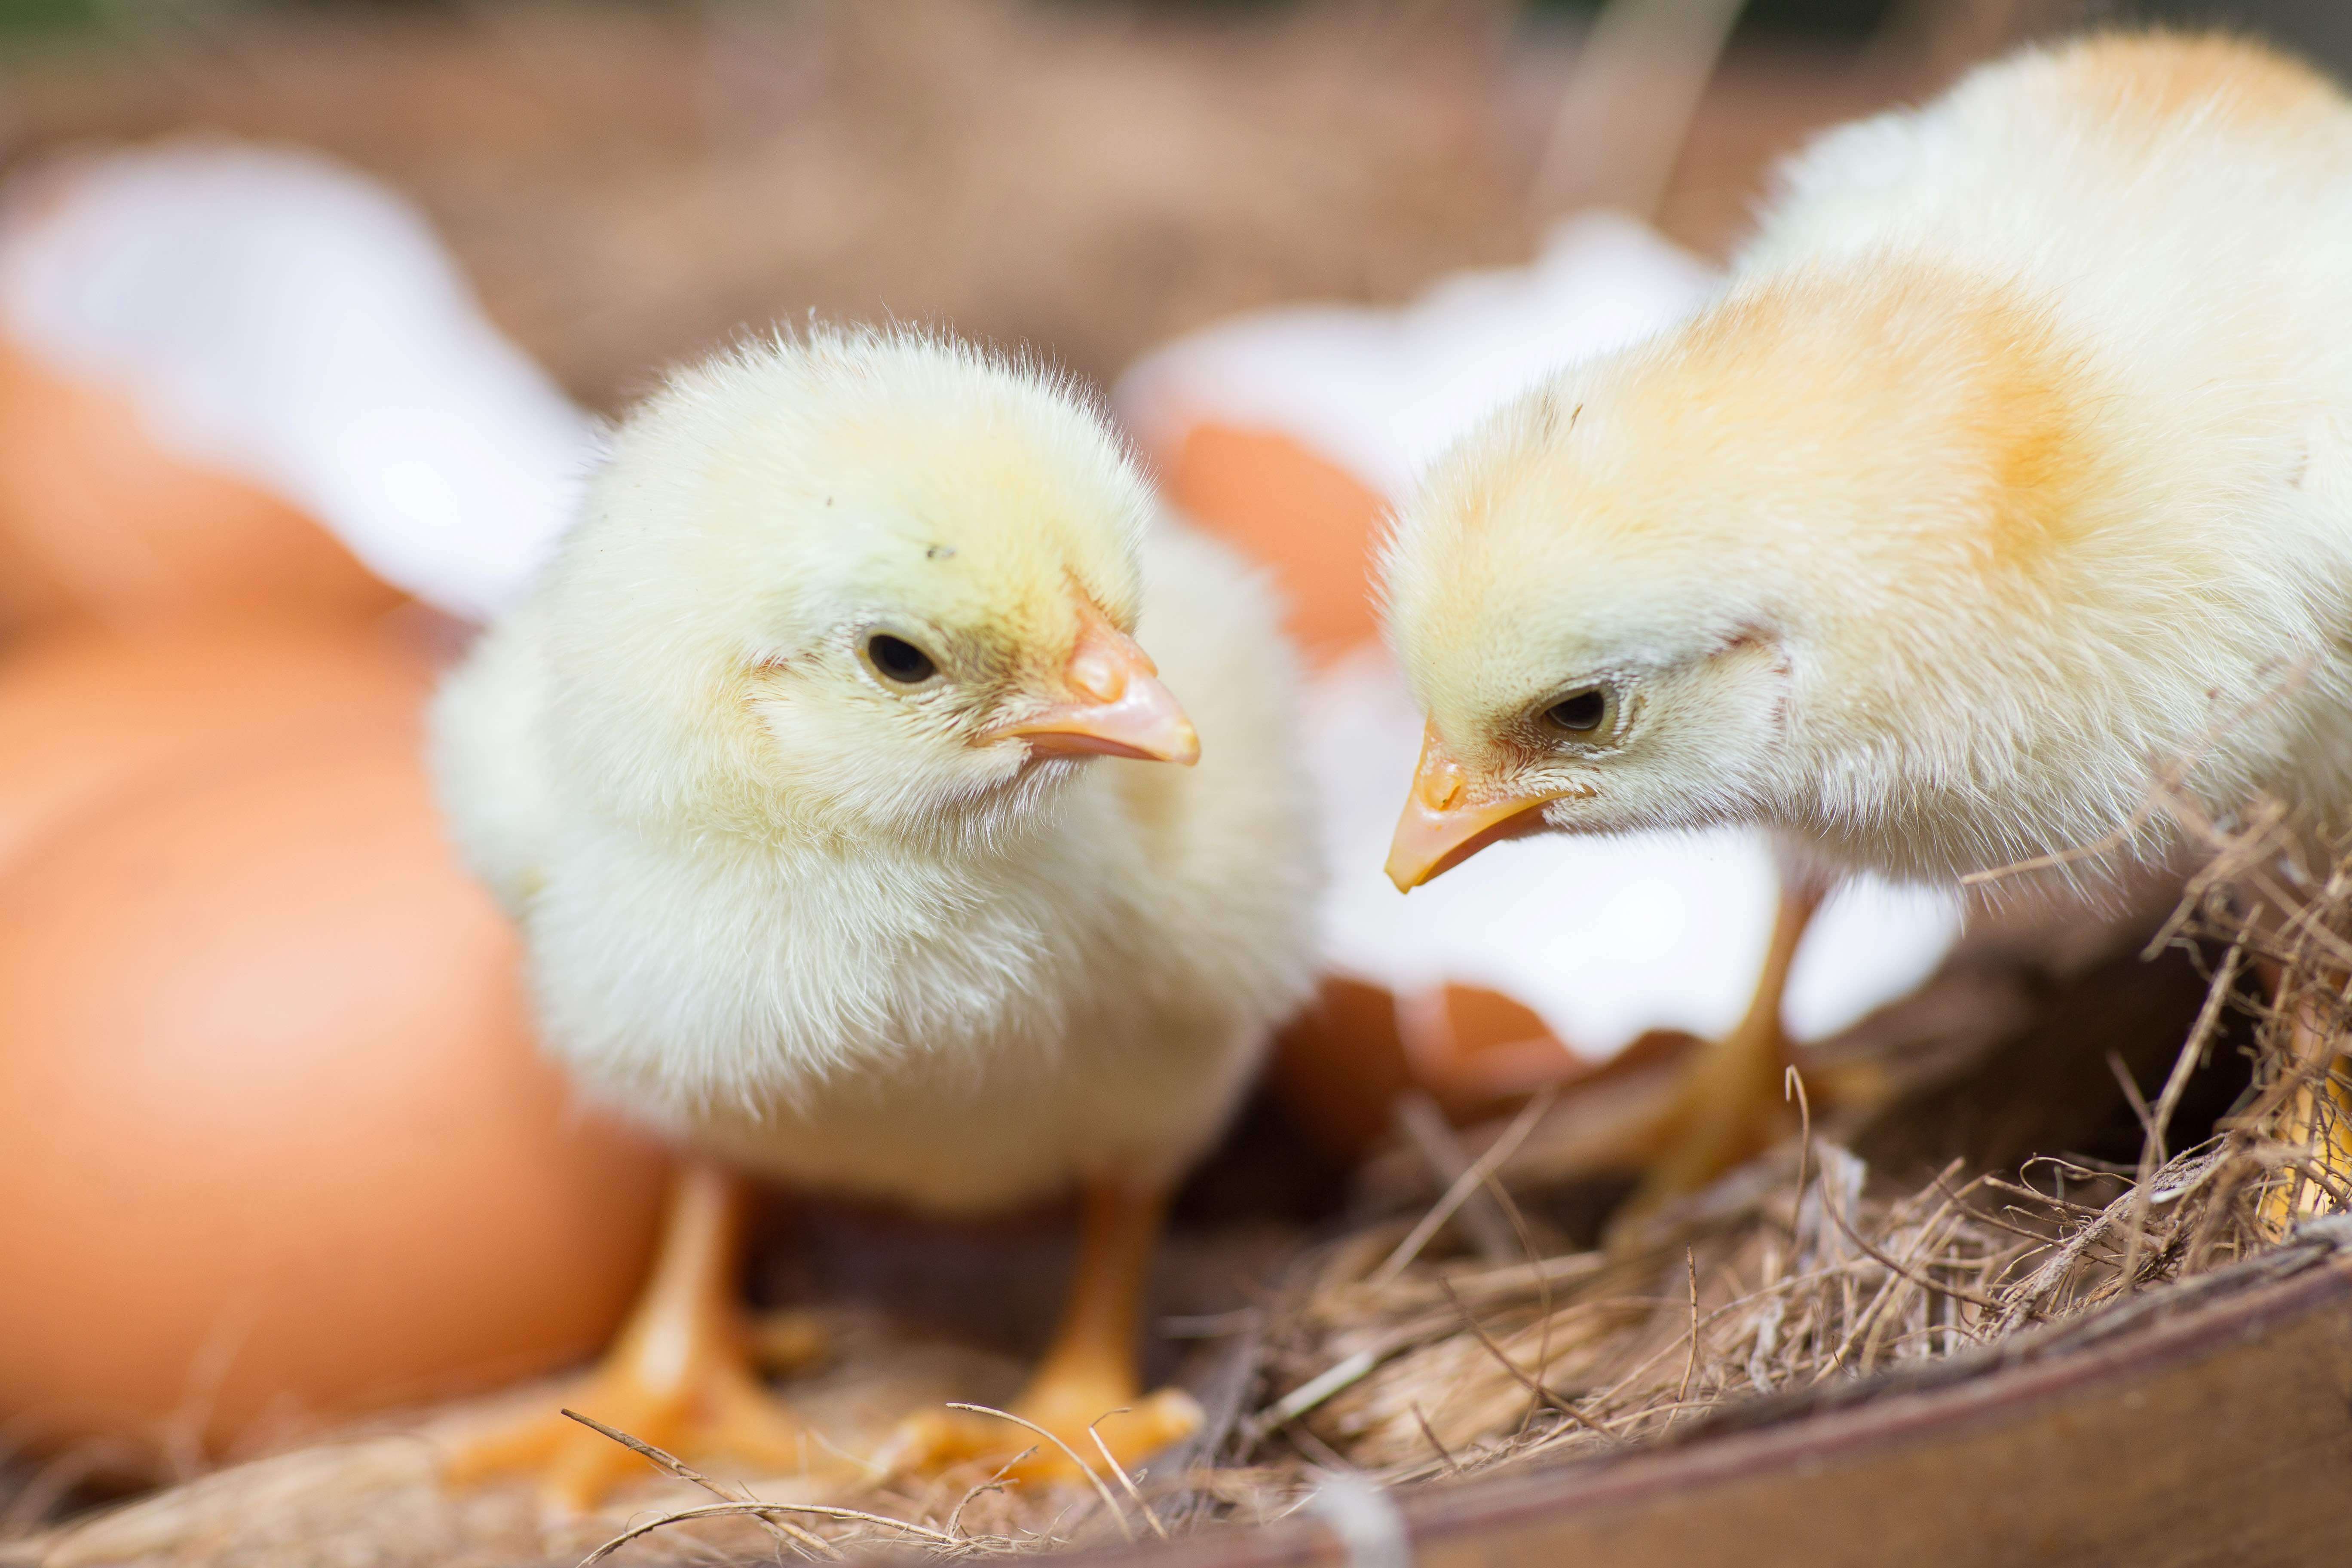 little fluffy chicks standing next to eggs